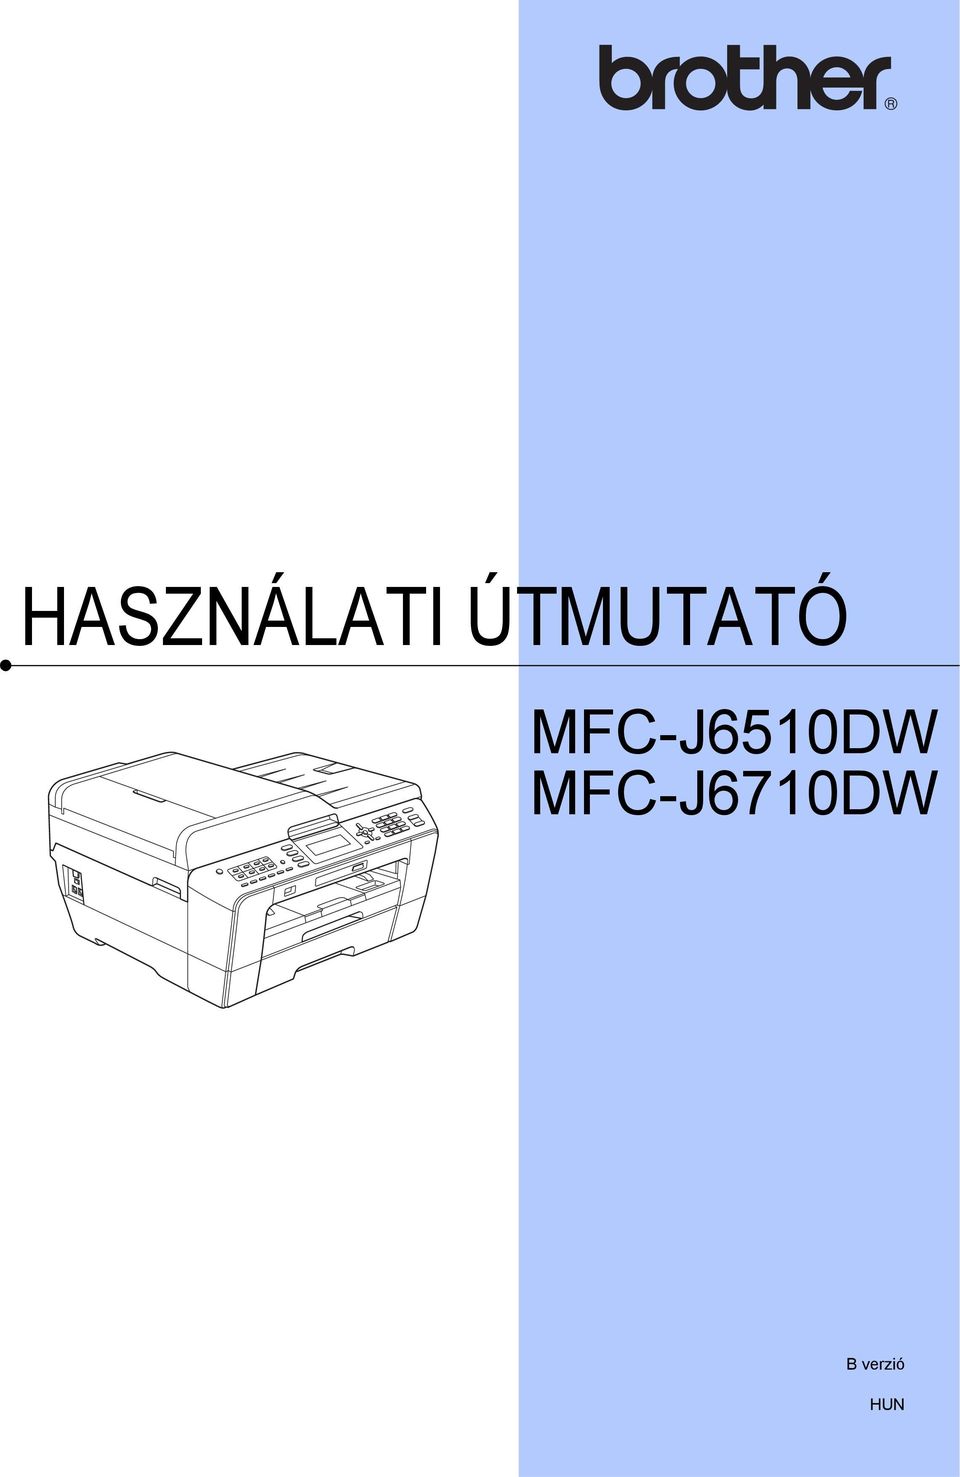 MFC-J6510DW